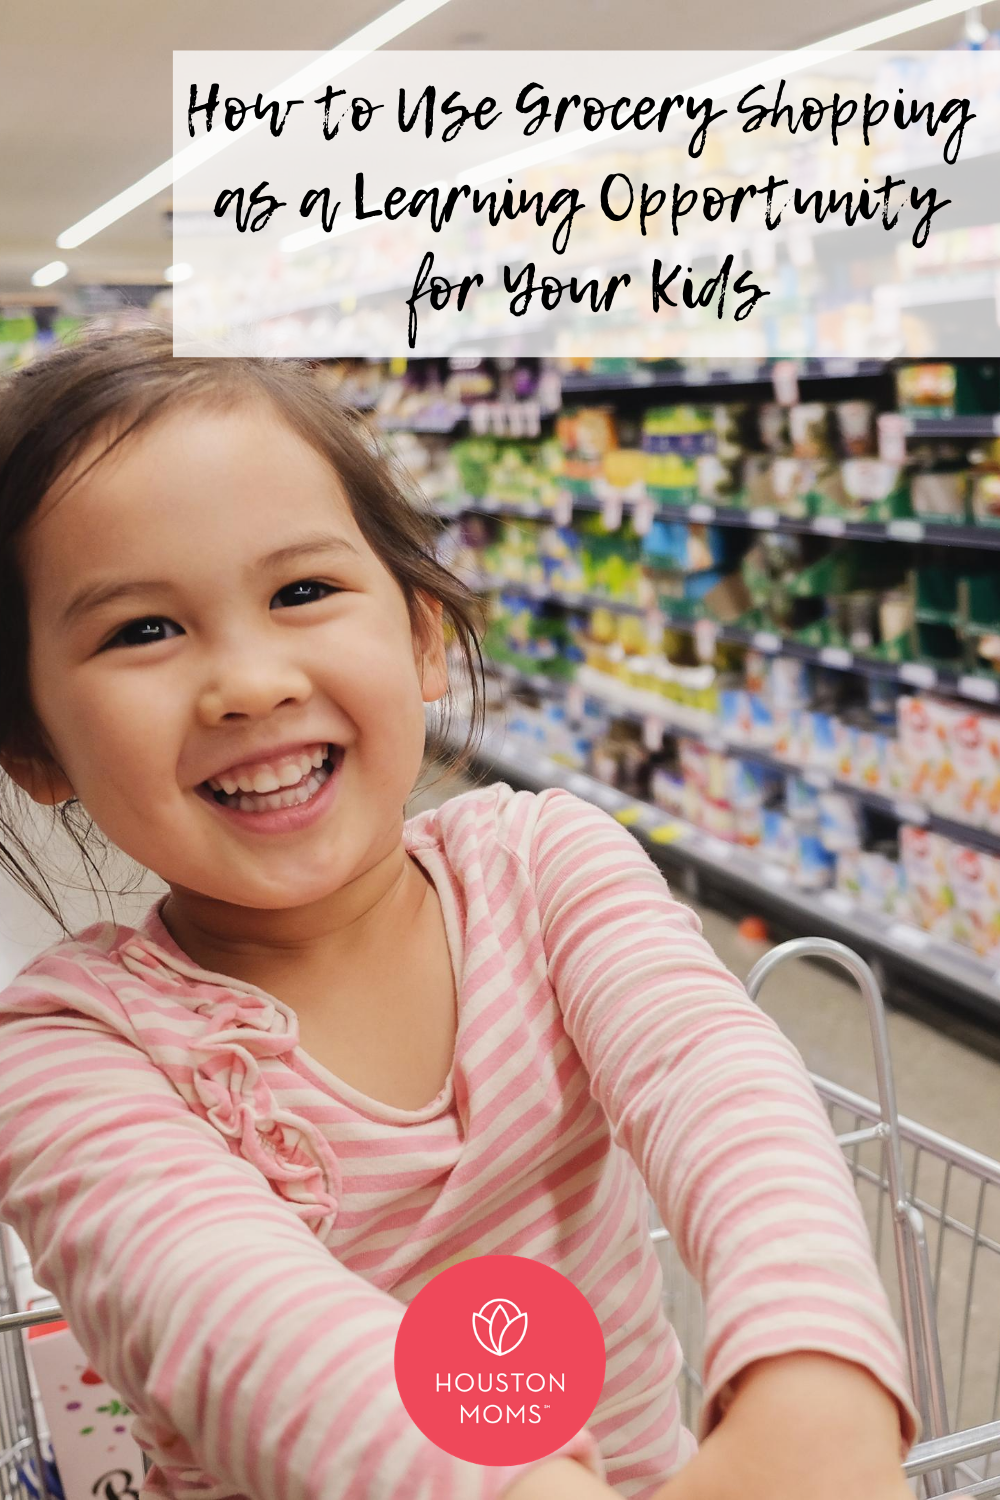 Houston Moms "How to Use Grocery Shopping as a Learning Opportunity for your Kids" #houstonmoms #houstonmomsblog #momsaroundhouston